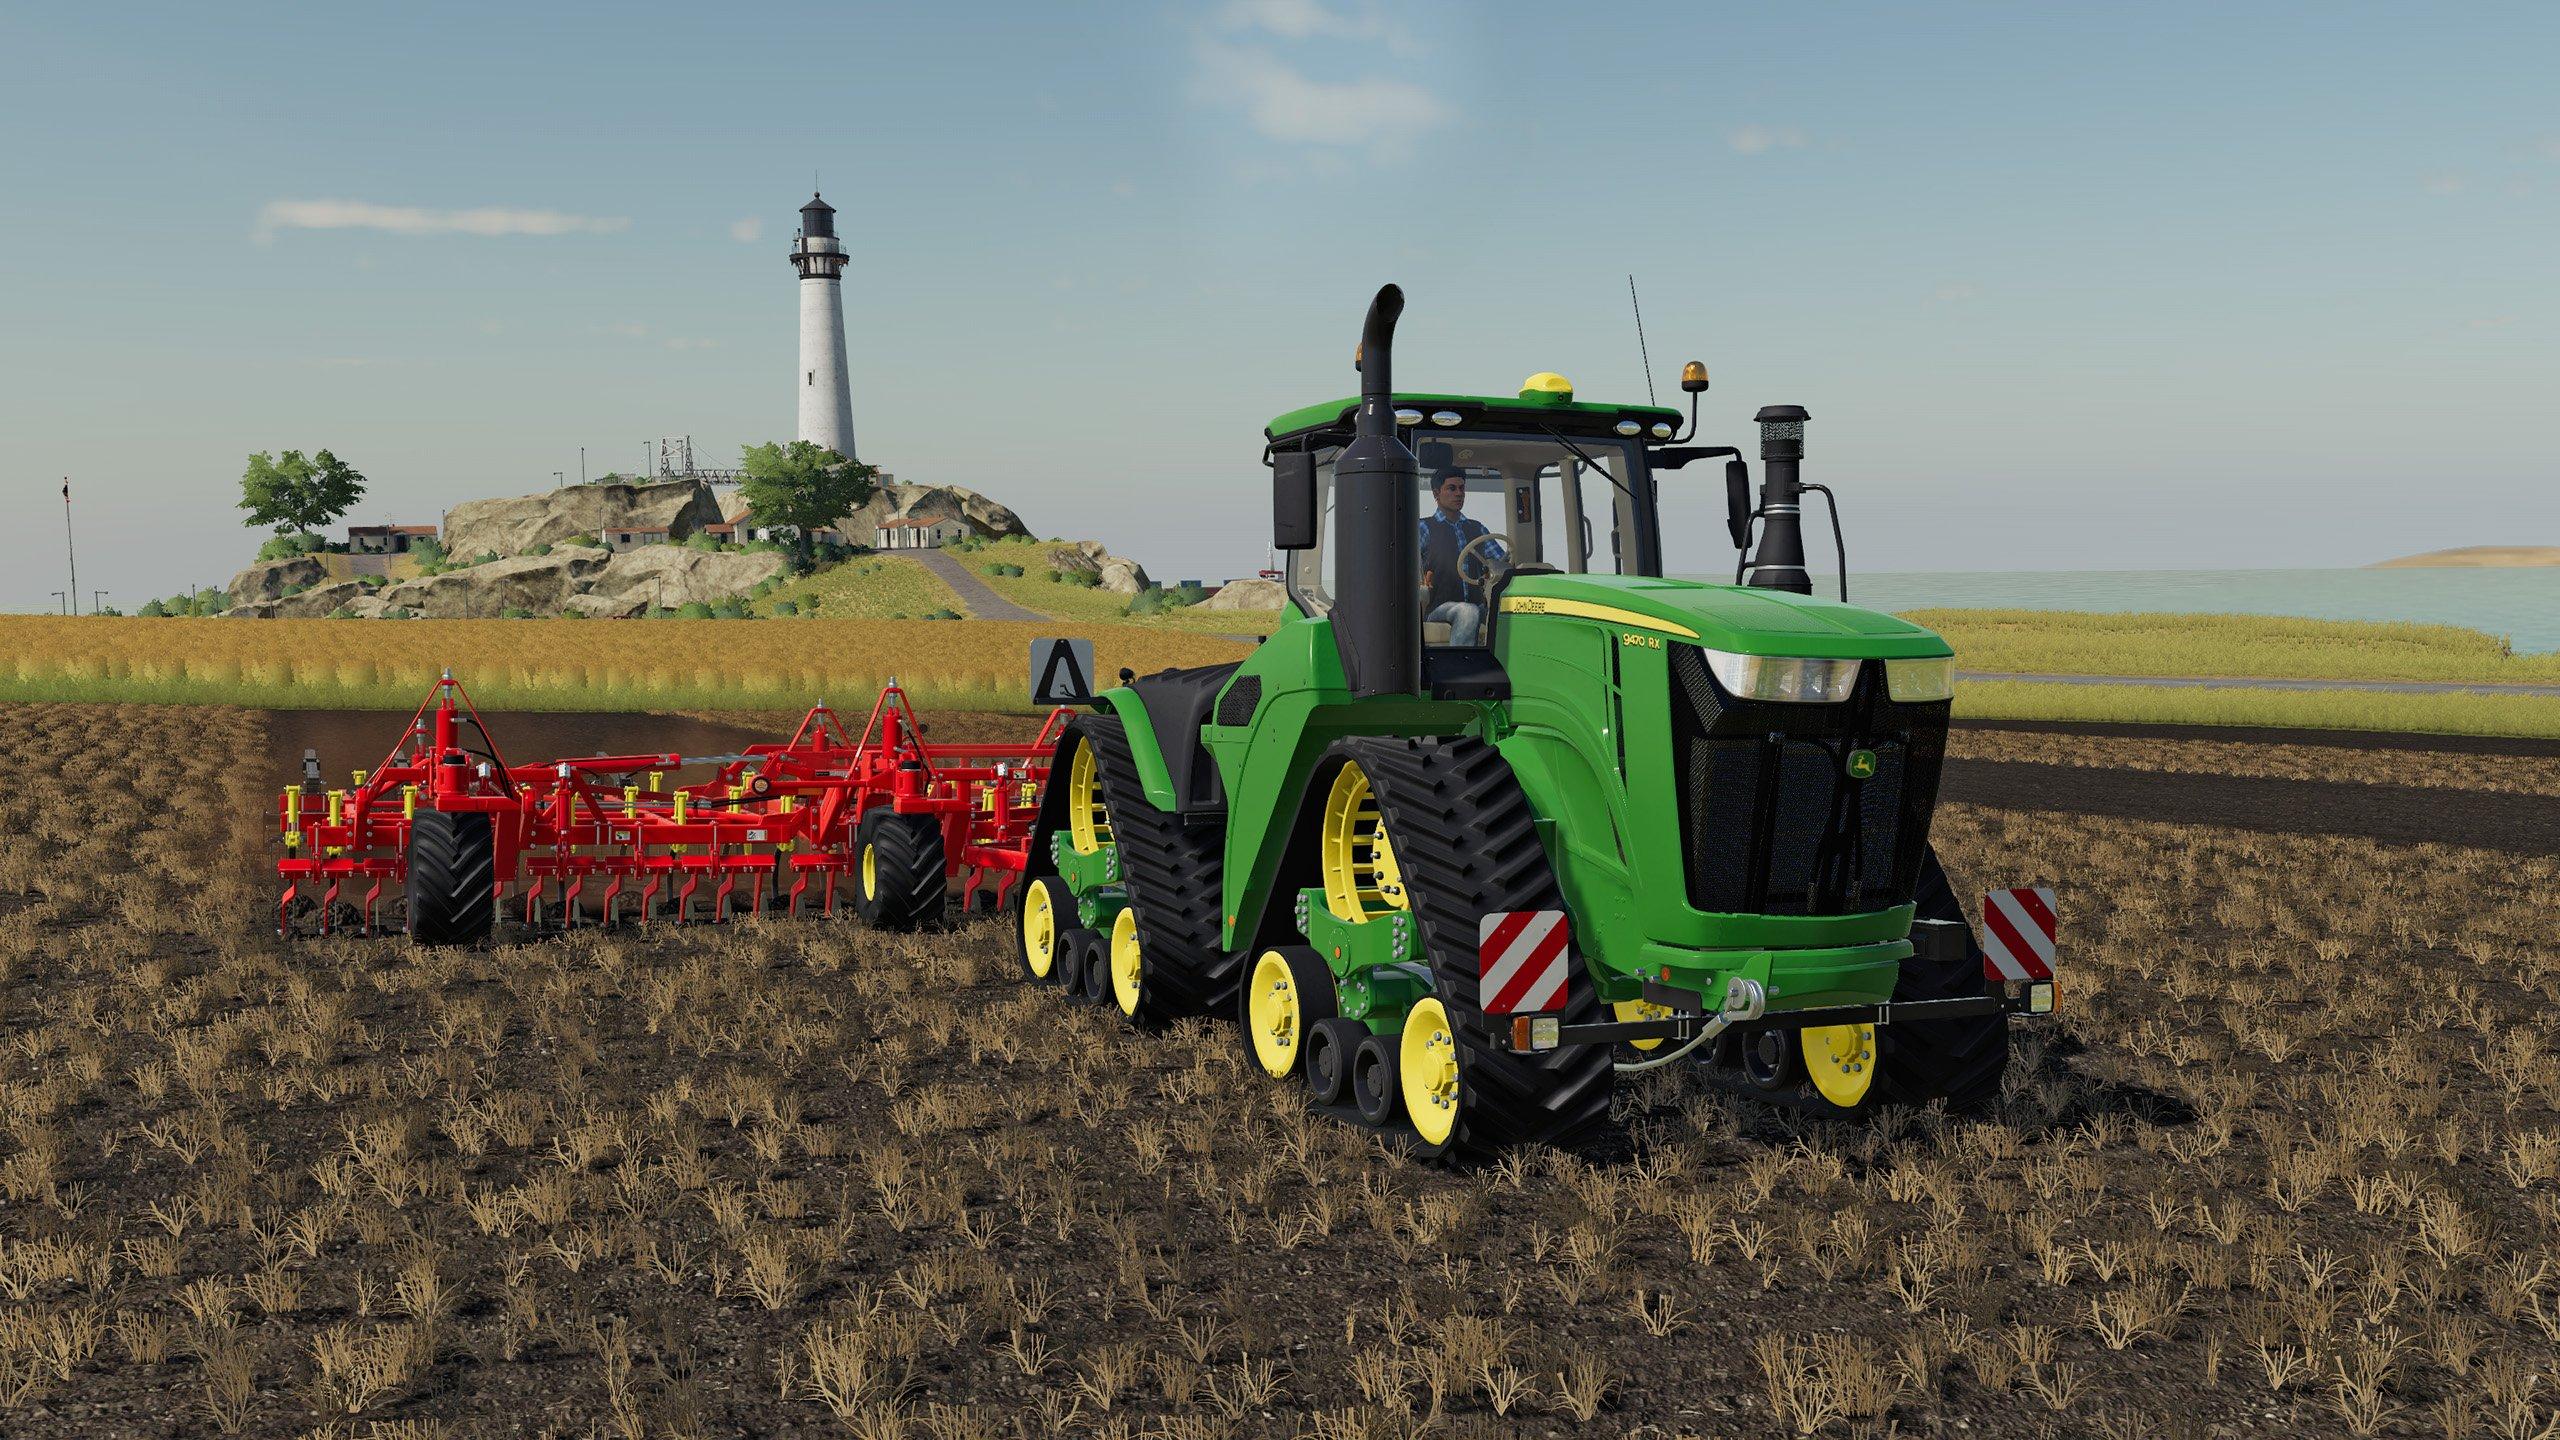 Koch media PS4 Farming Simulator 19 Premium Edition Colorido